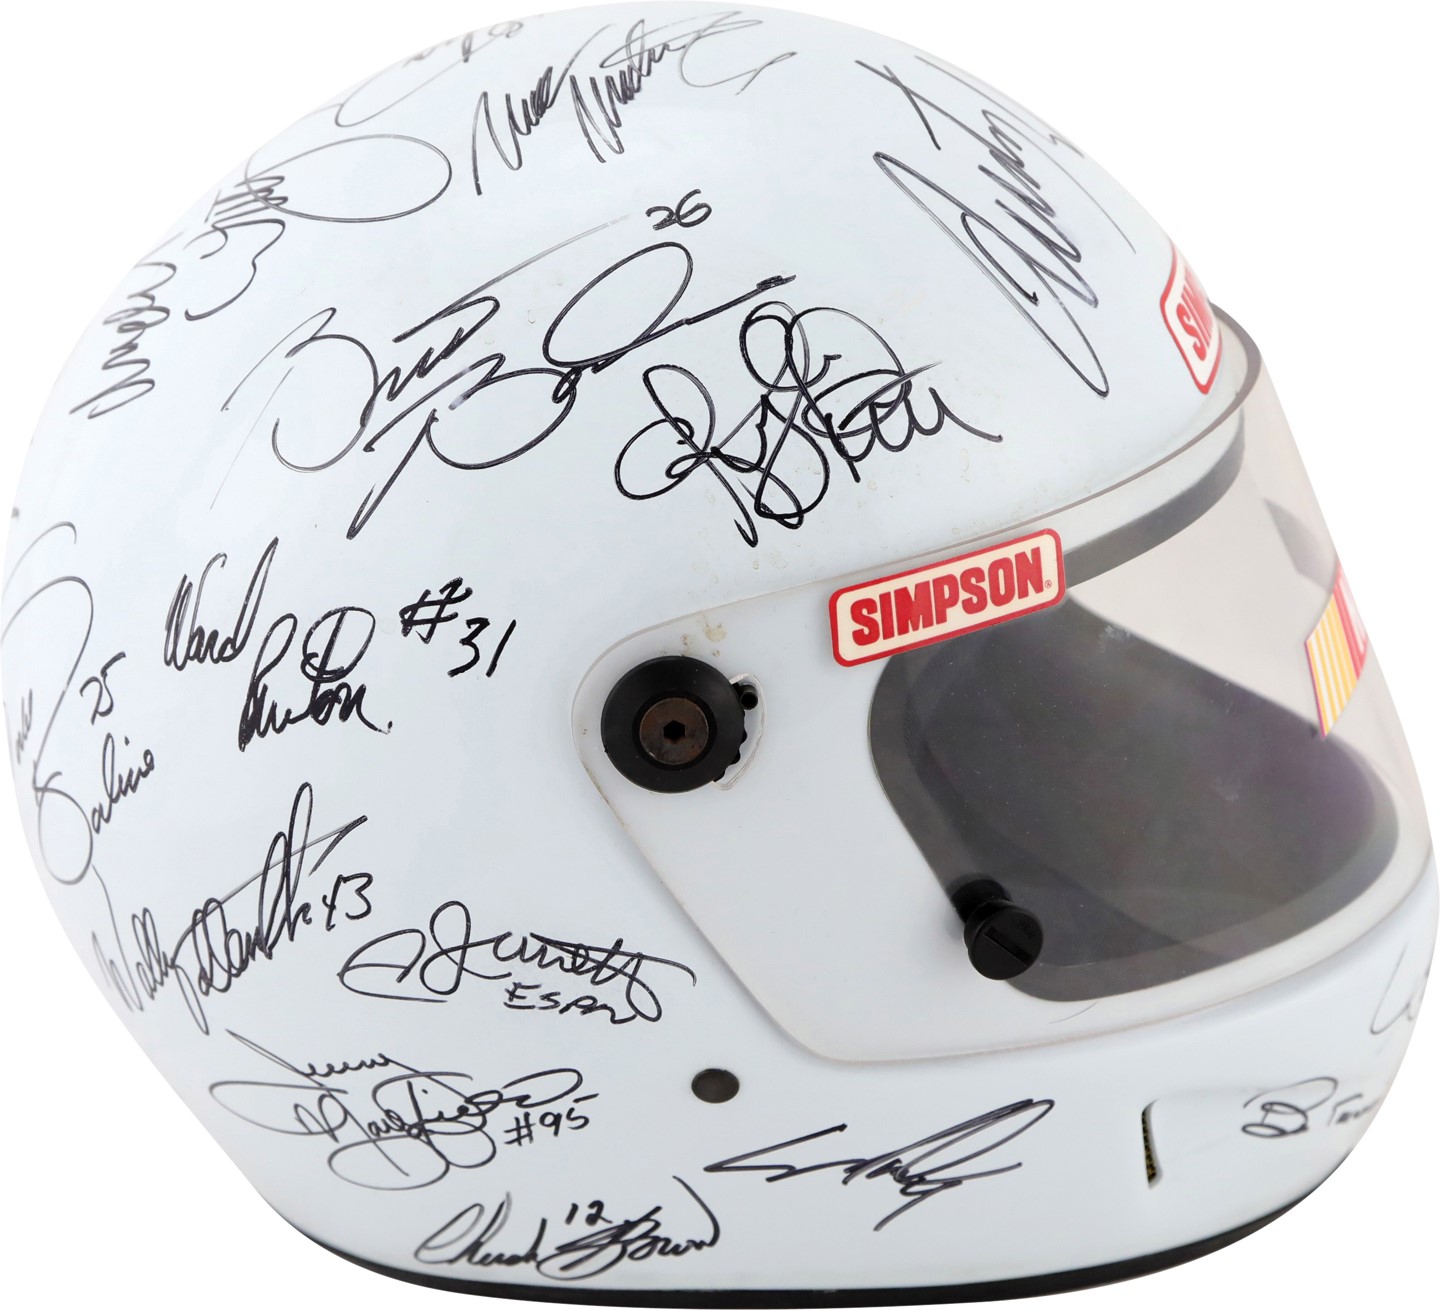 - 1994 NASCAR Drivers Signed Helmet w/Dale Earnhardt